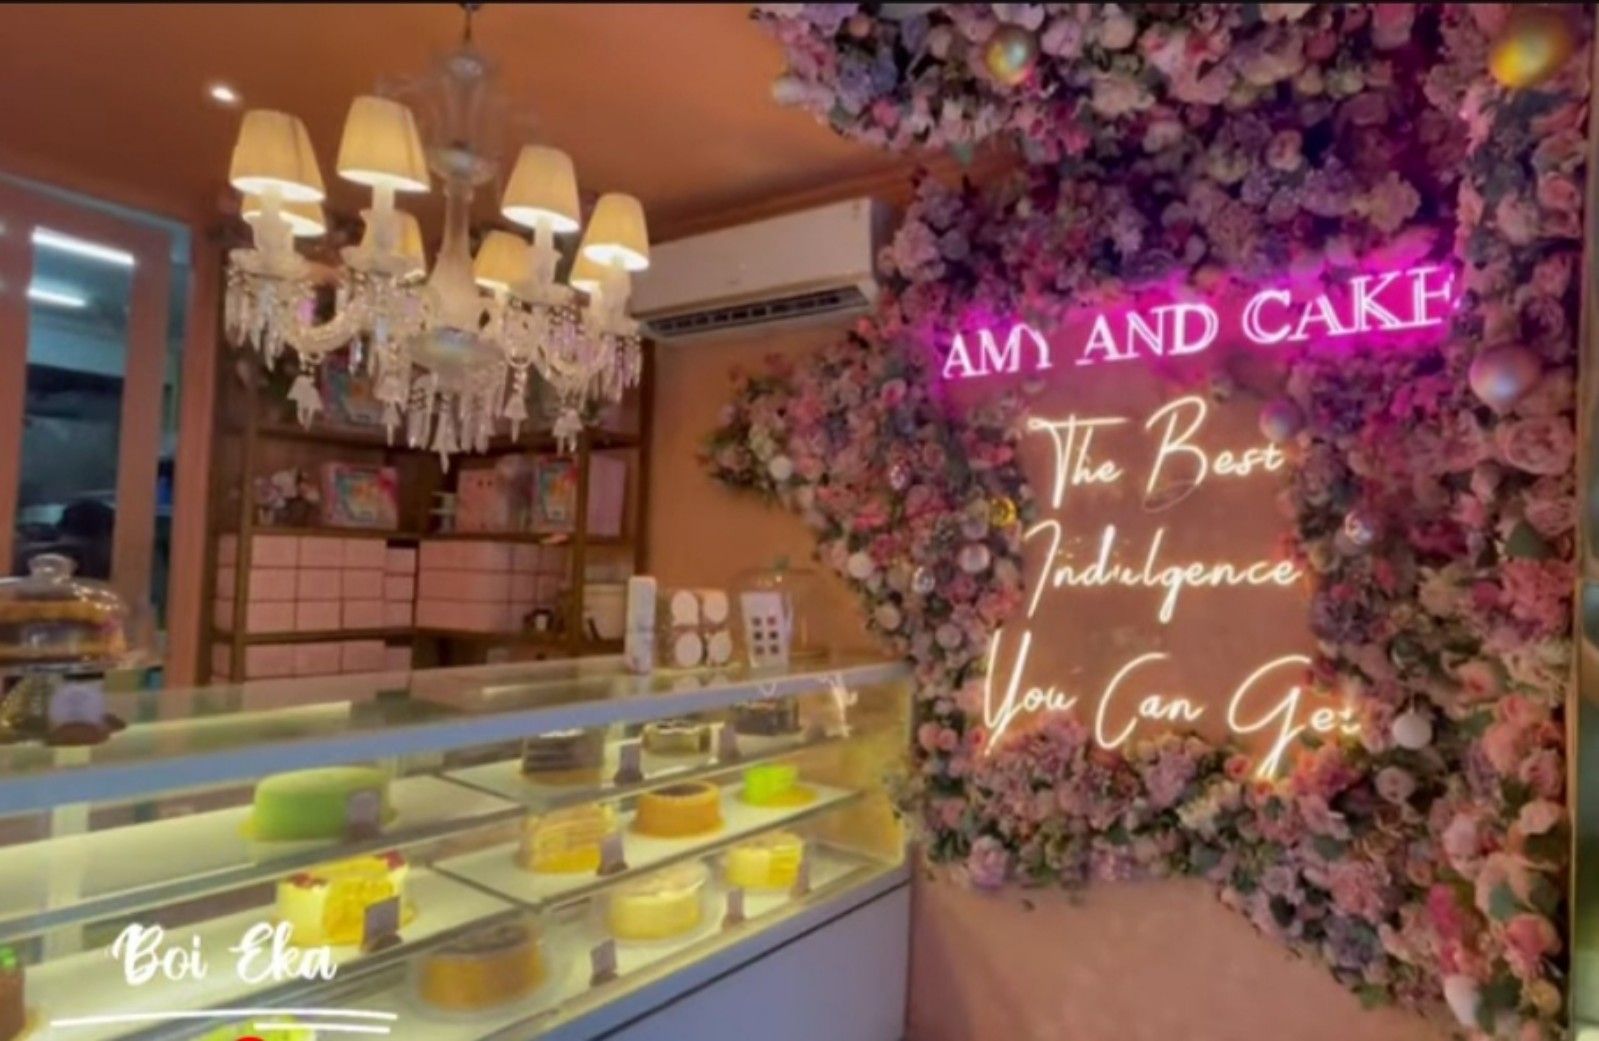 Amy and Cake, resto estetik di Pondok Aren Tangerang Selatan Banten/tangkapan layar youtube/Channel BoiEka